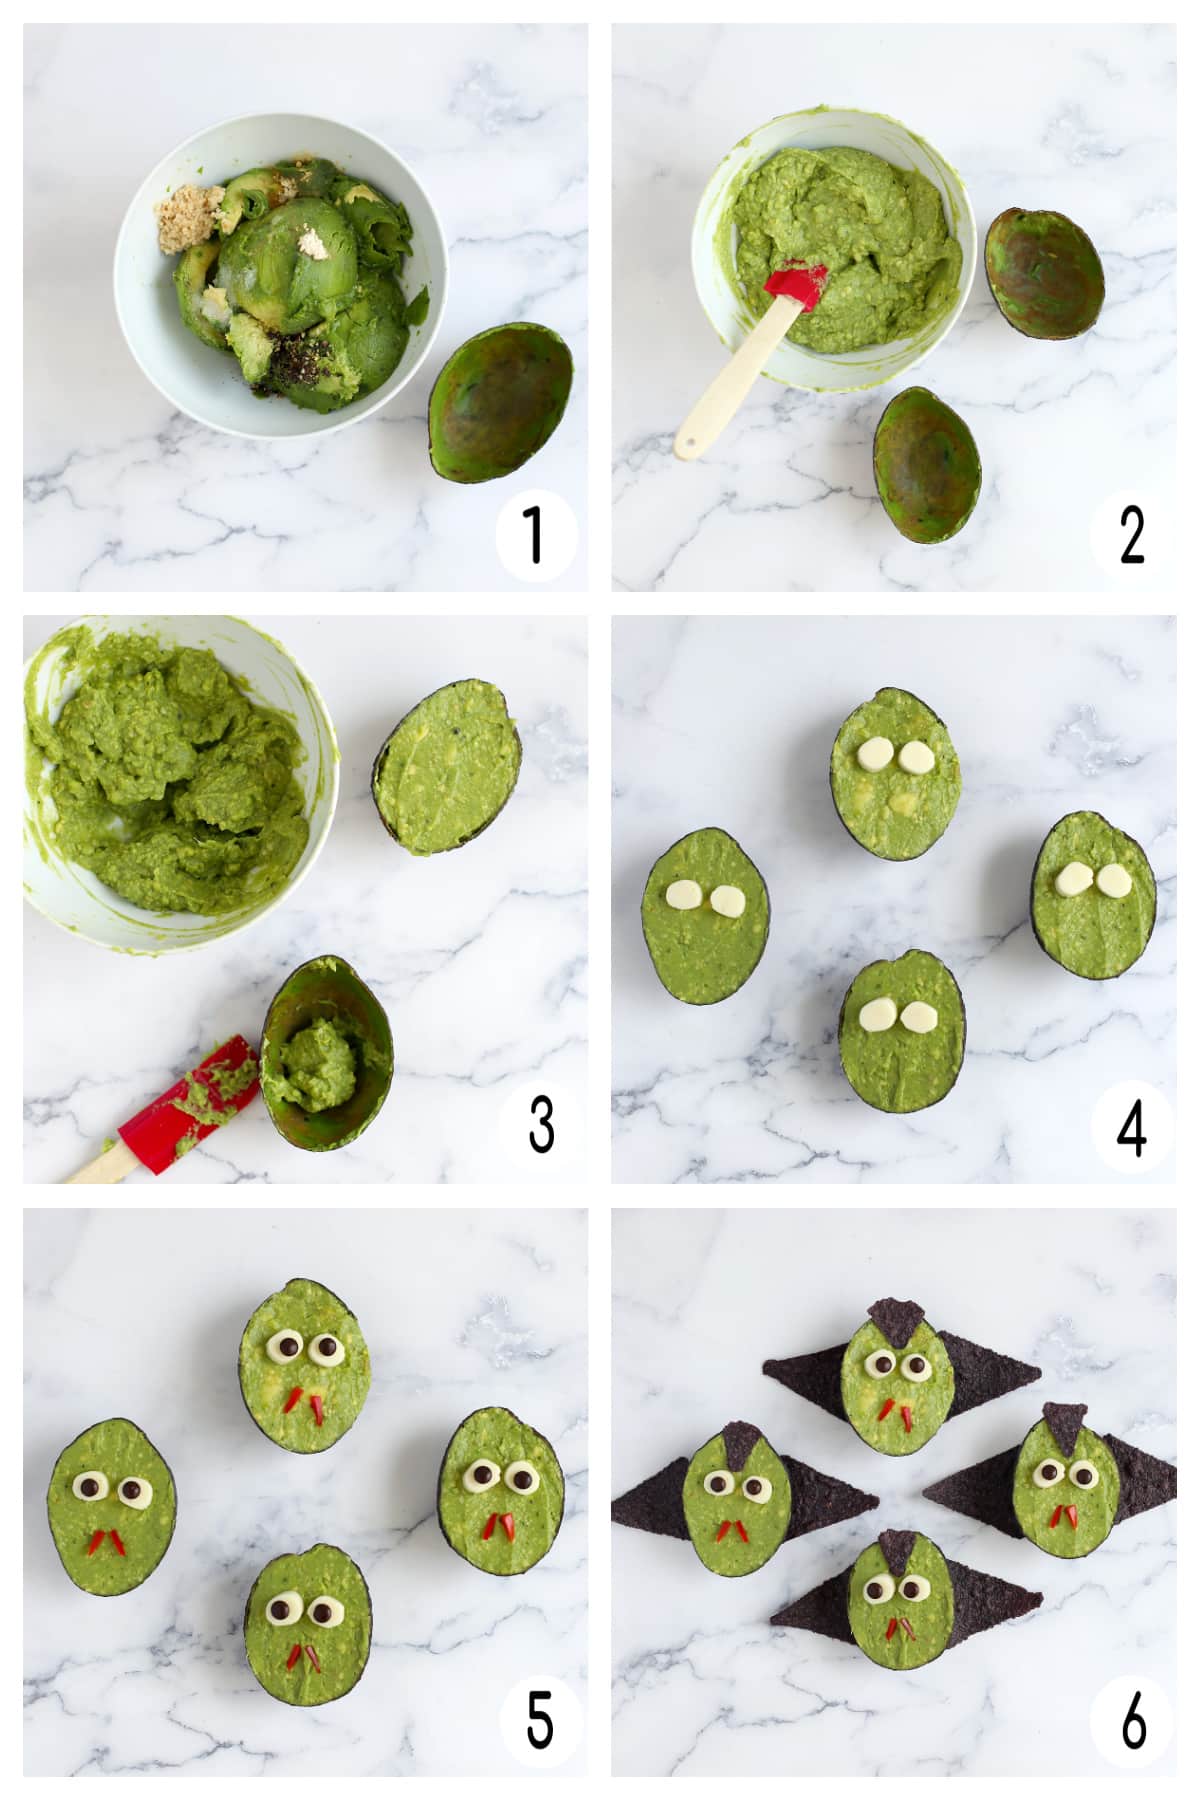 How to make halloween guacamole in avocado shells.